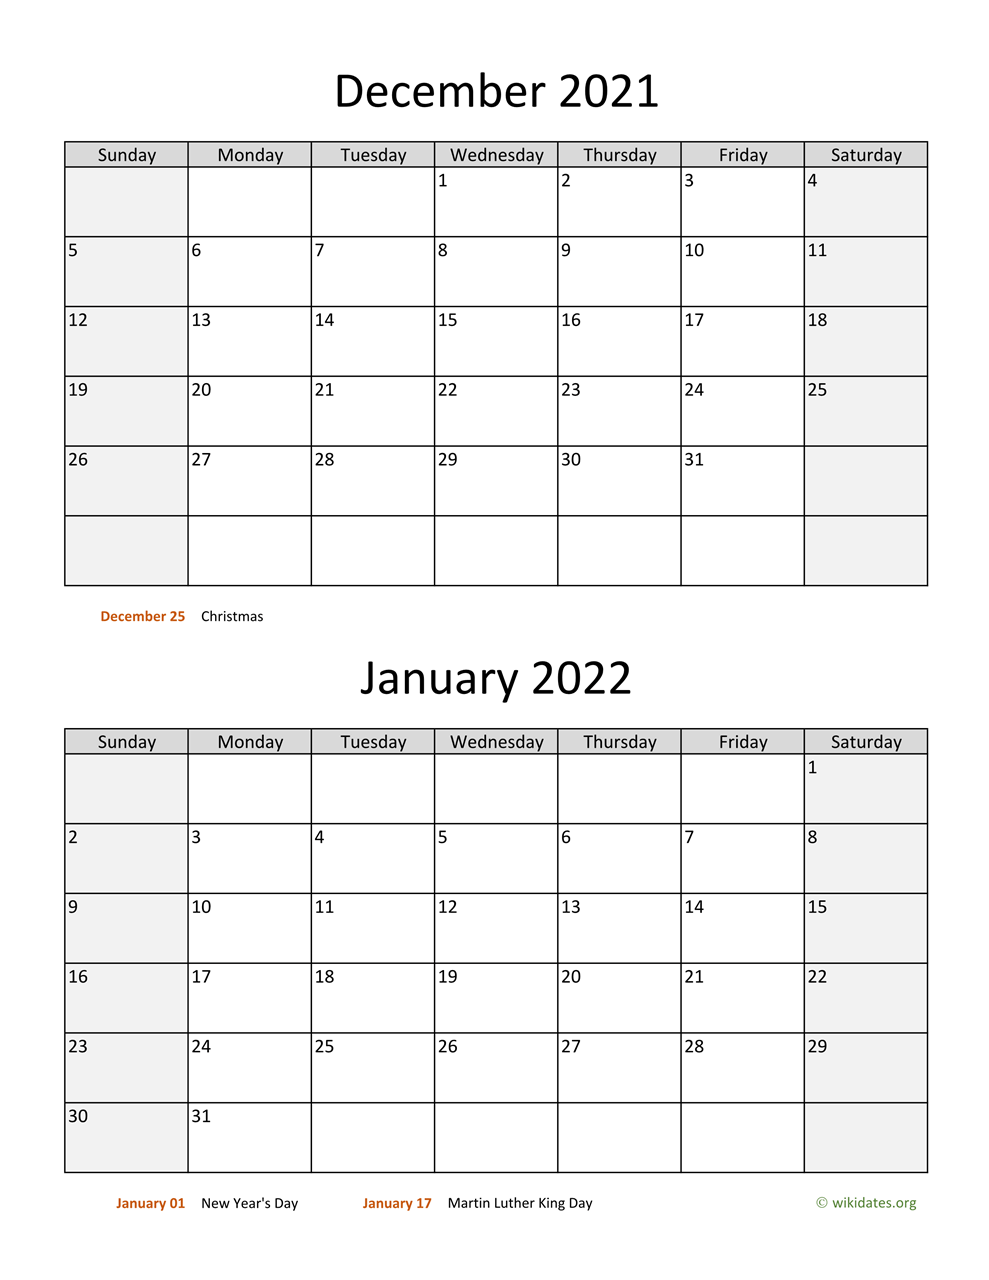 December And January 2022 Calendar December 2021 And January 2022 Calendar | Wikidates.org